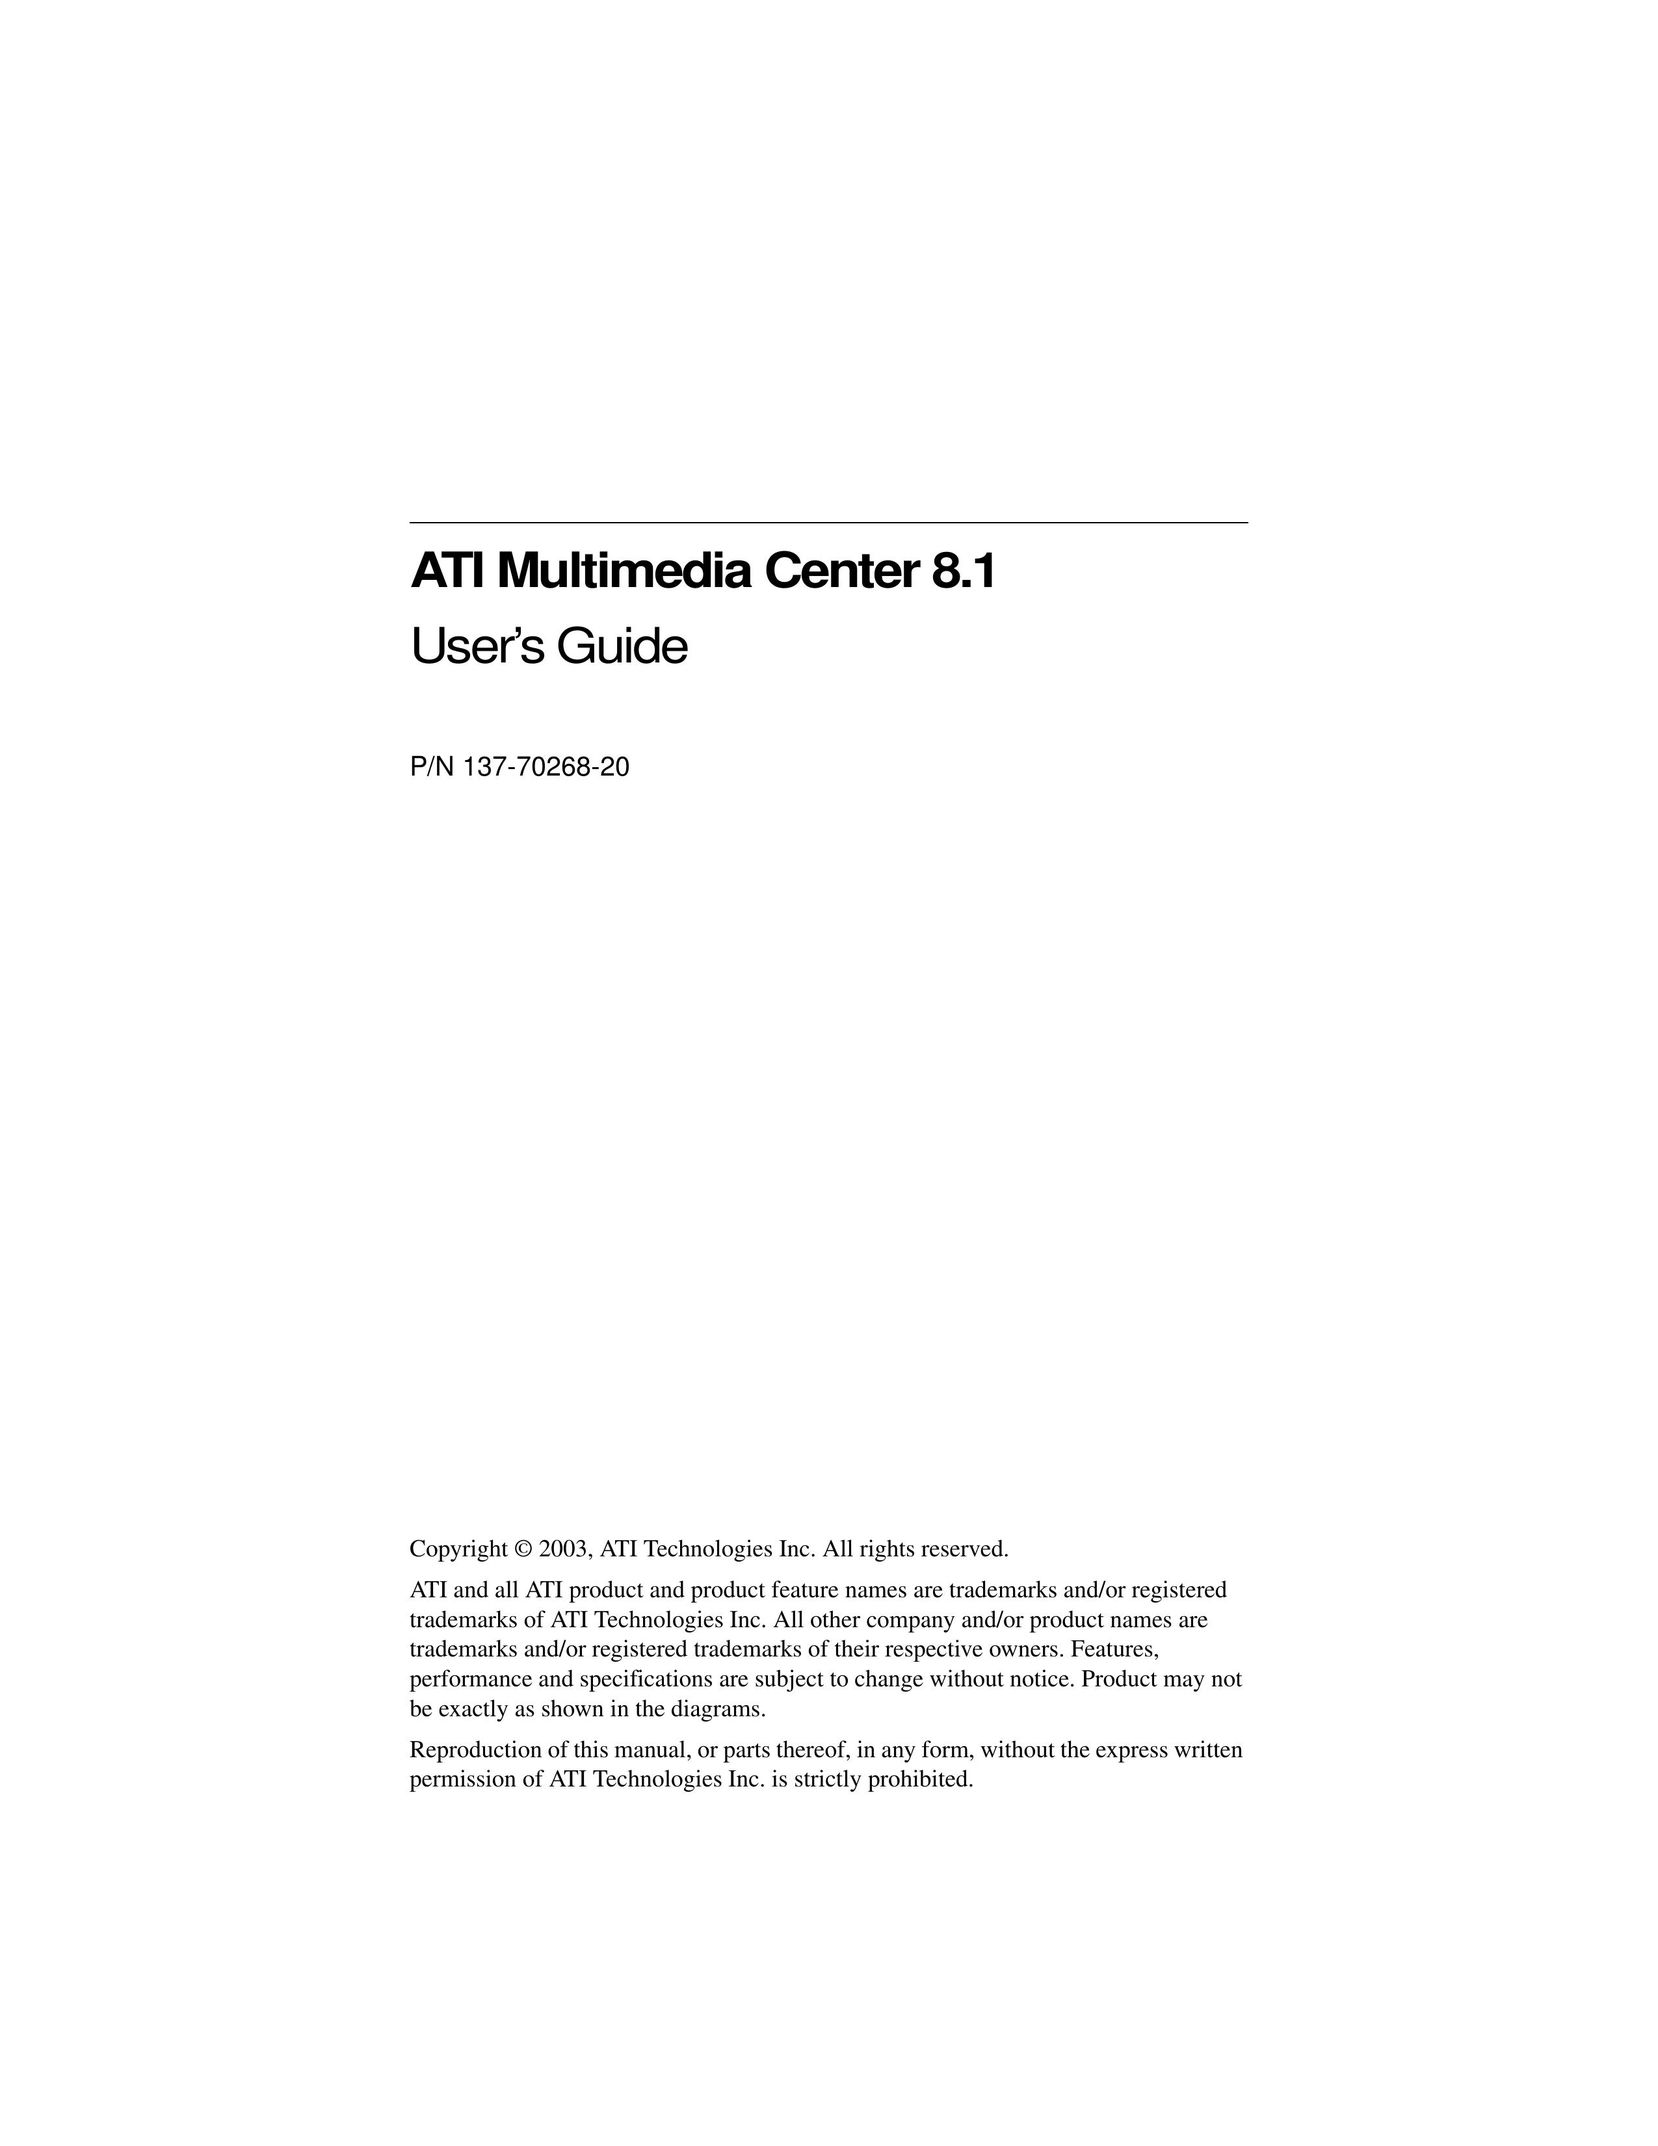 ATI Technologies ATI Multimedia Center 8.1 Portable Multimedia Player User Manual